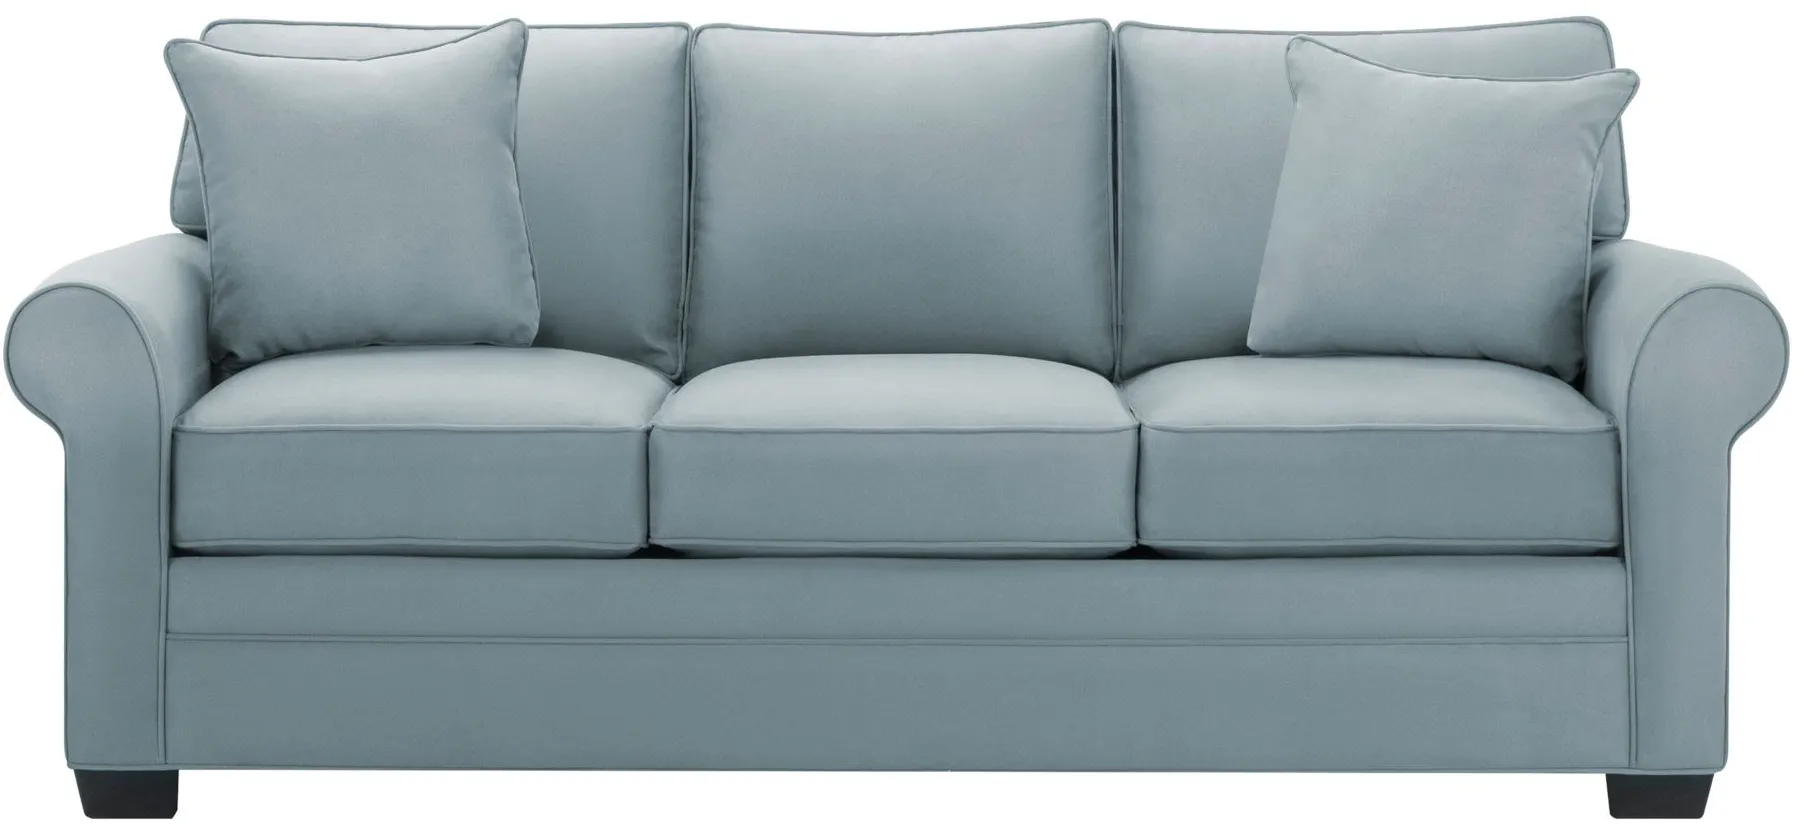 Glendora Queen Sleeper Sofa in Suede So Soft Hydra by H.M. Richards